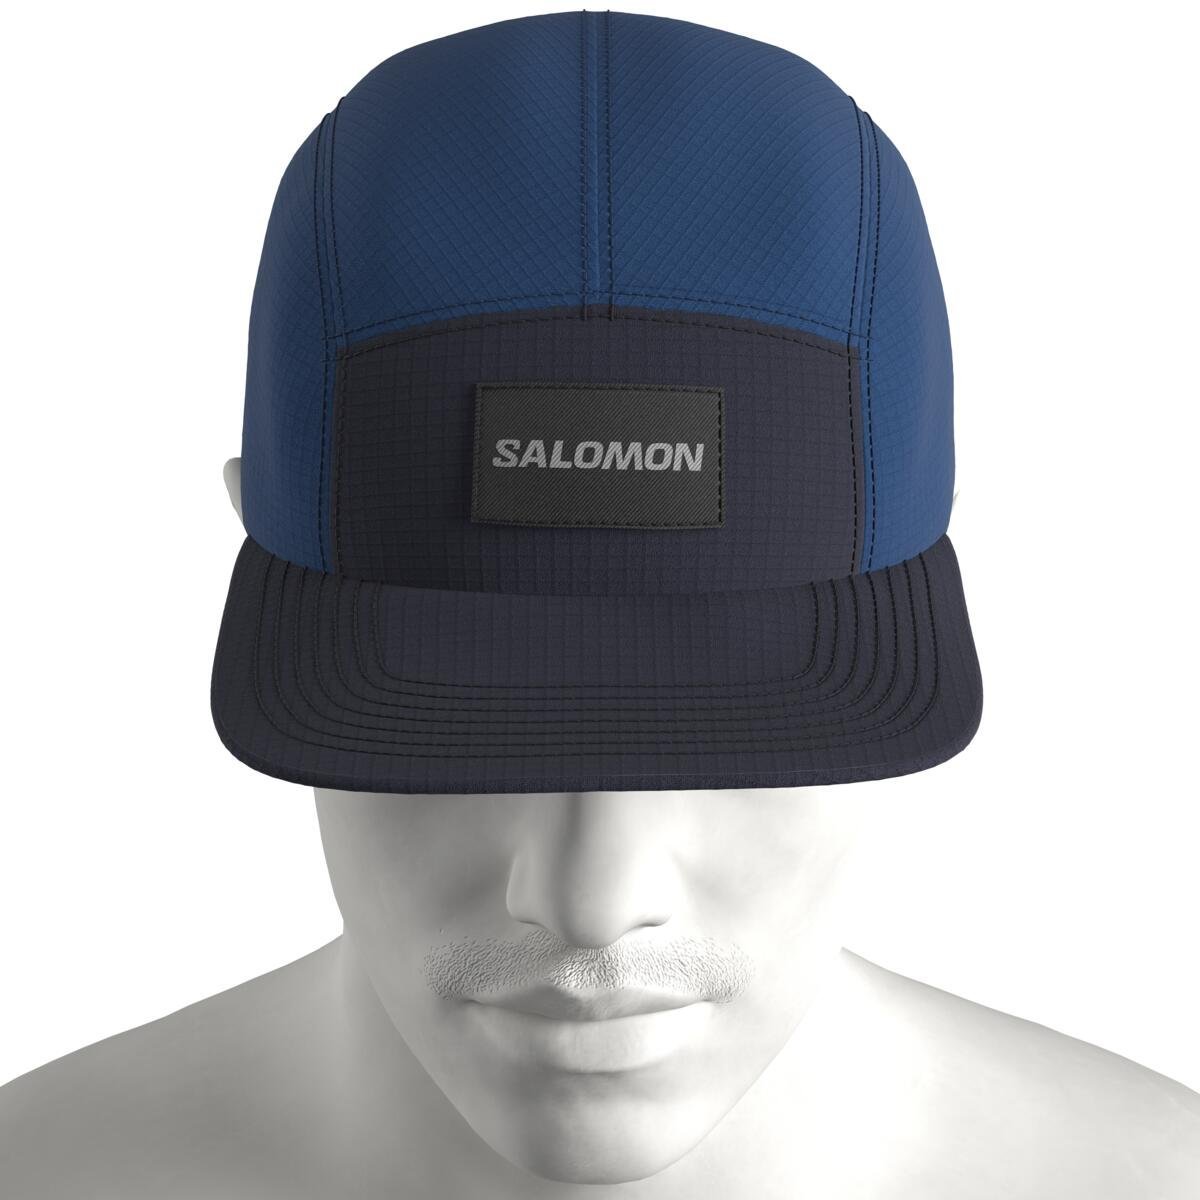 Salomon Bonatti WP päťpanelová čiapka - modrá